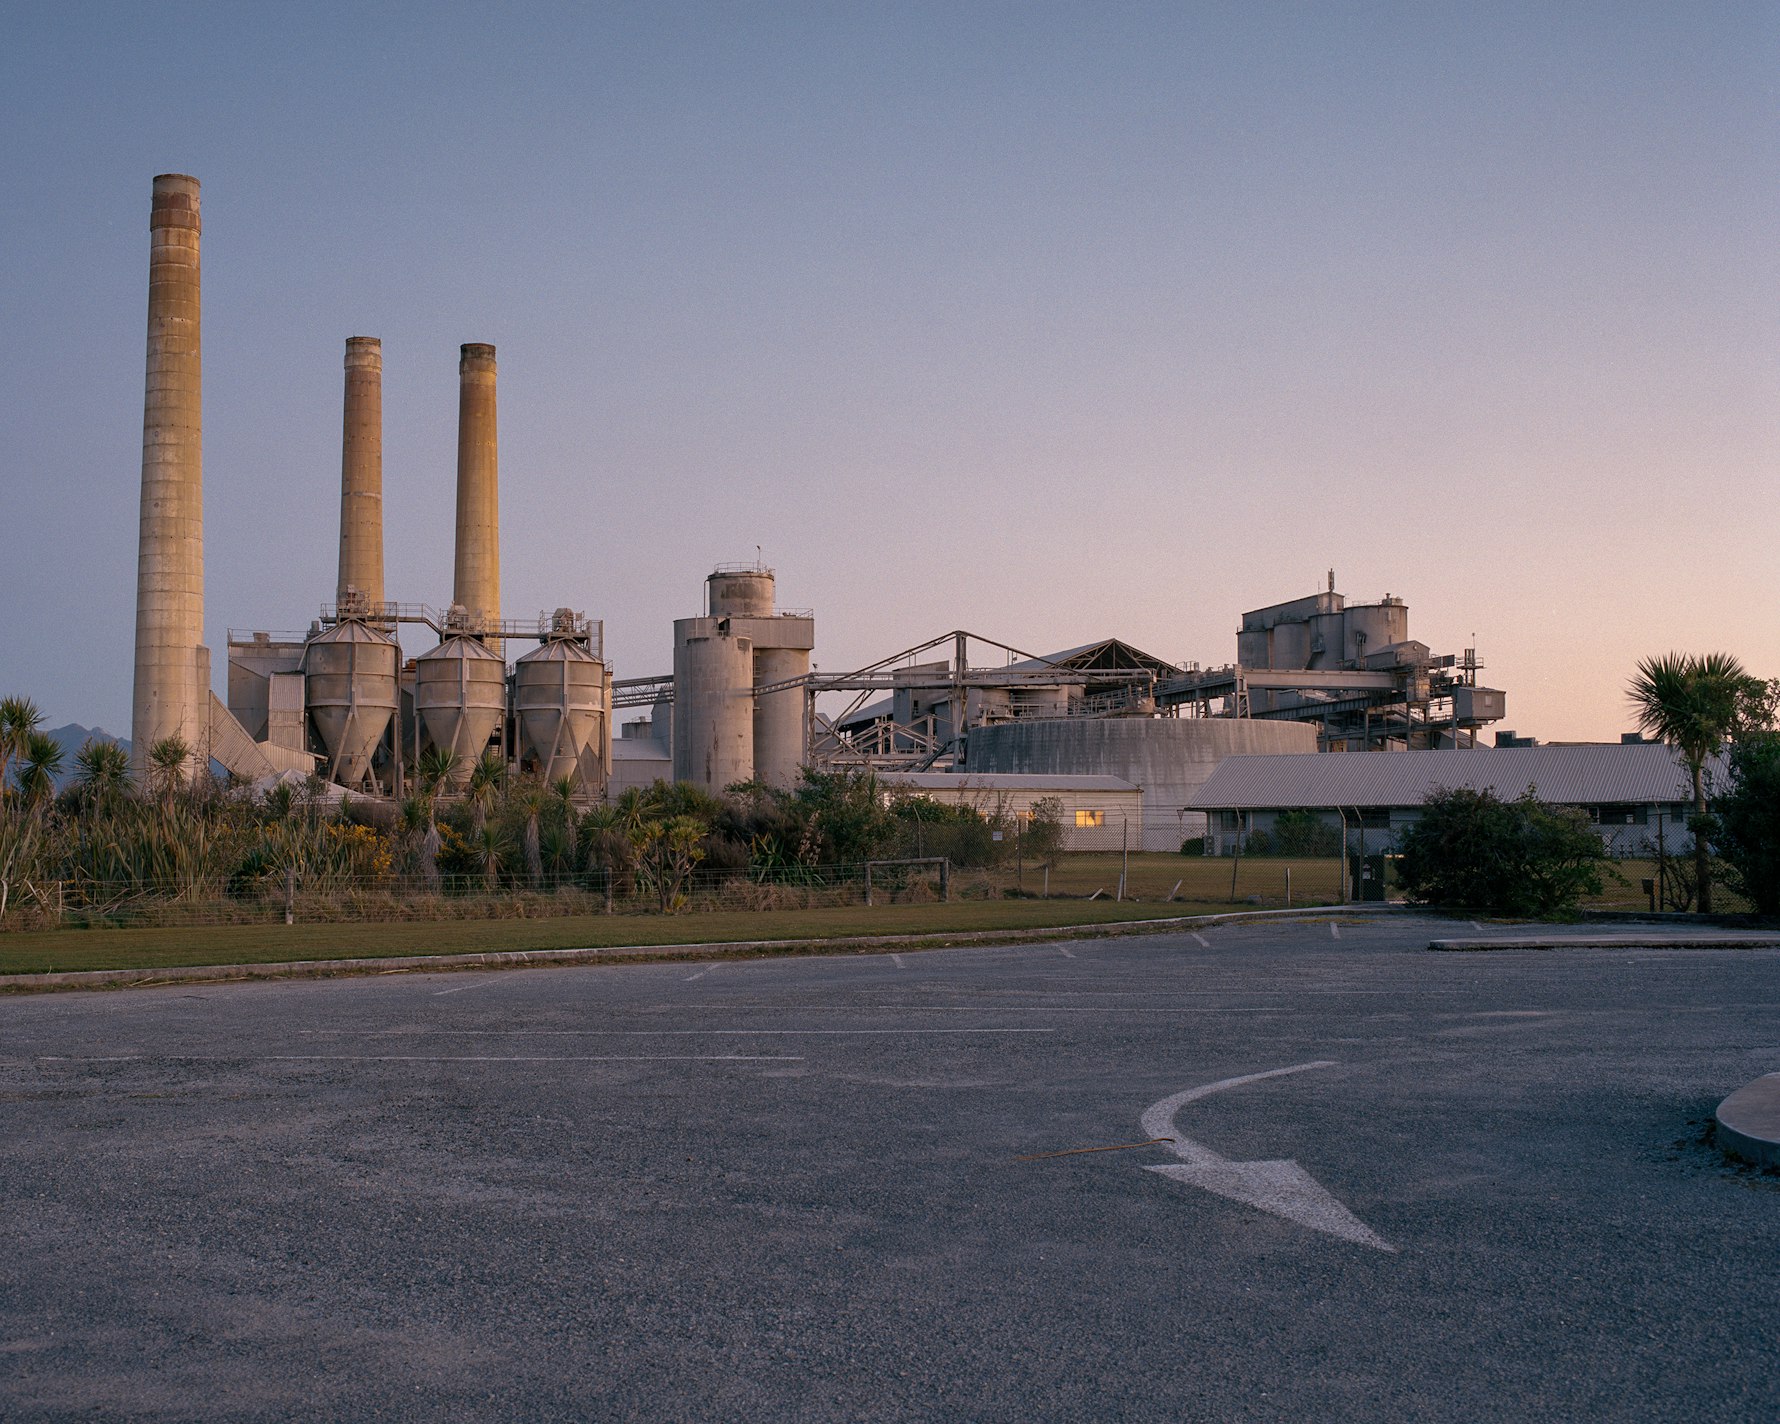 Holcim Cement Plant at dusk, Cape Foulwind, 2016